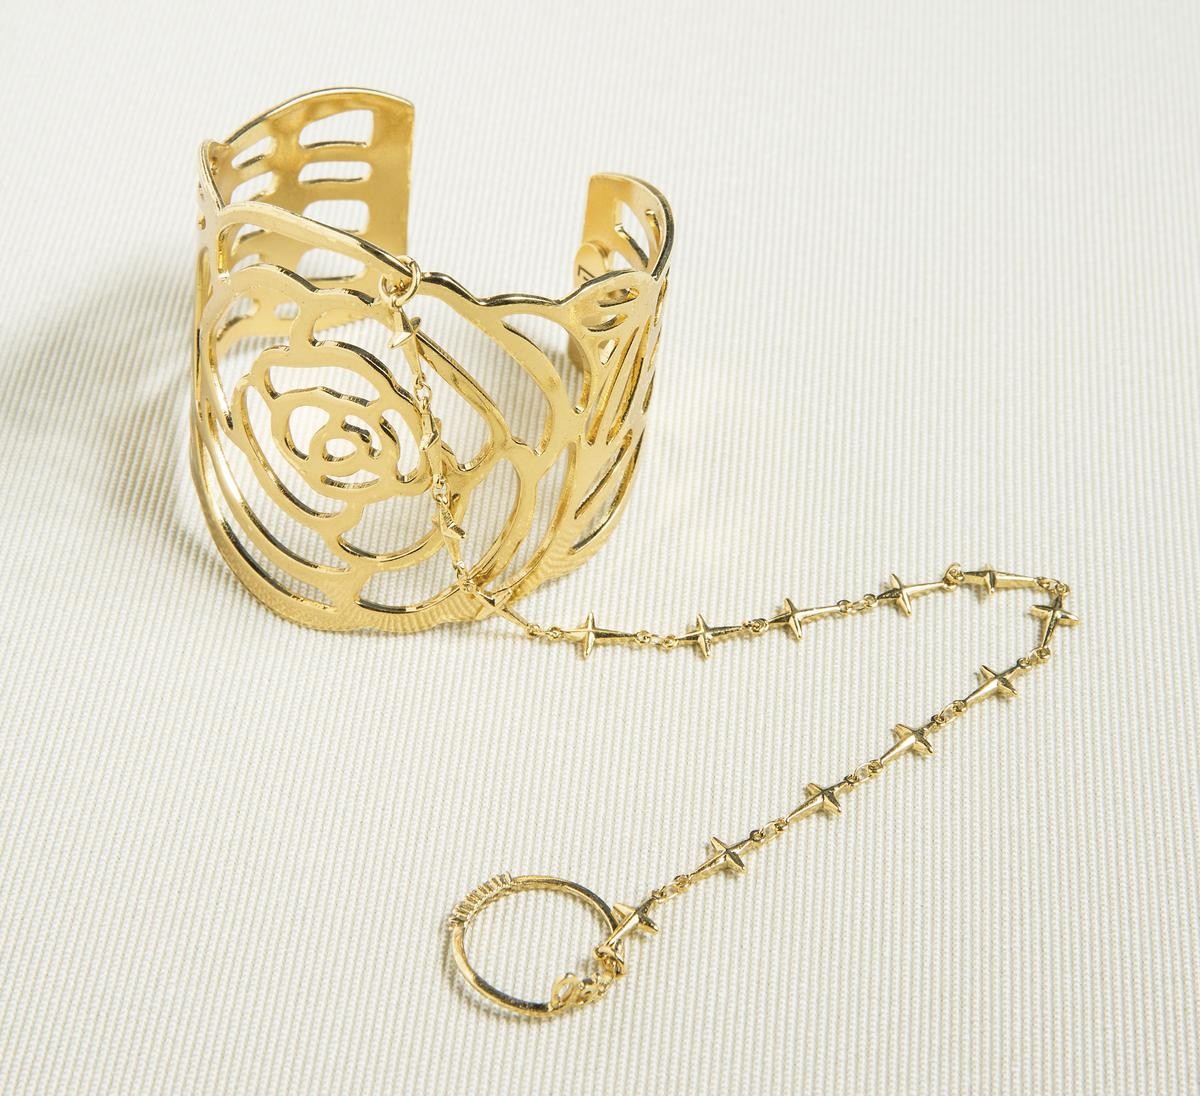 ecllective玫瑰花造型手環。廠商贈送